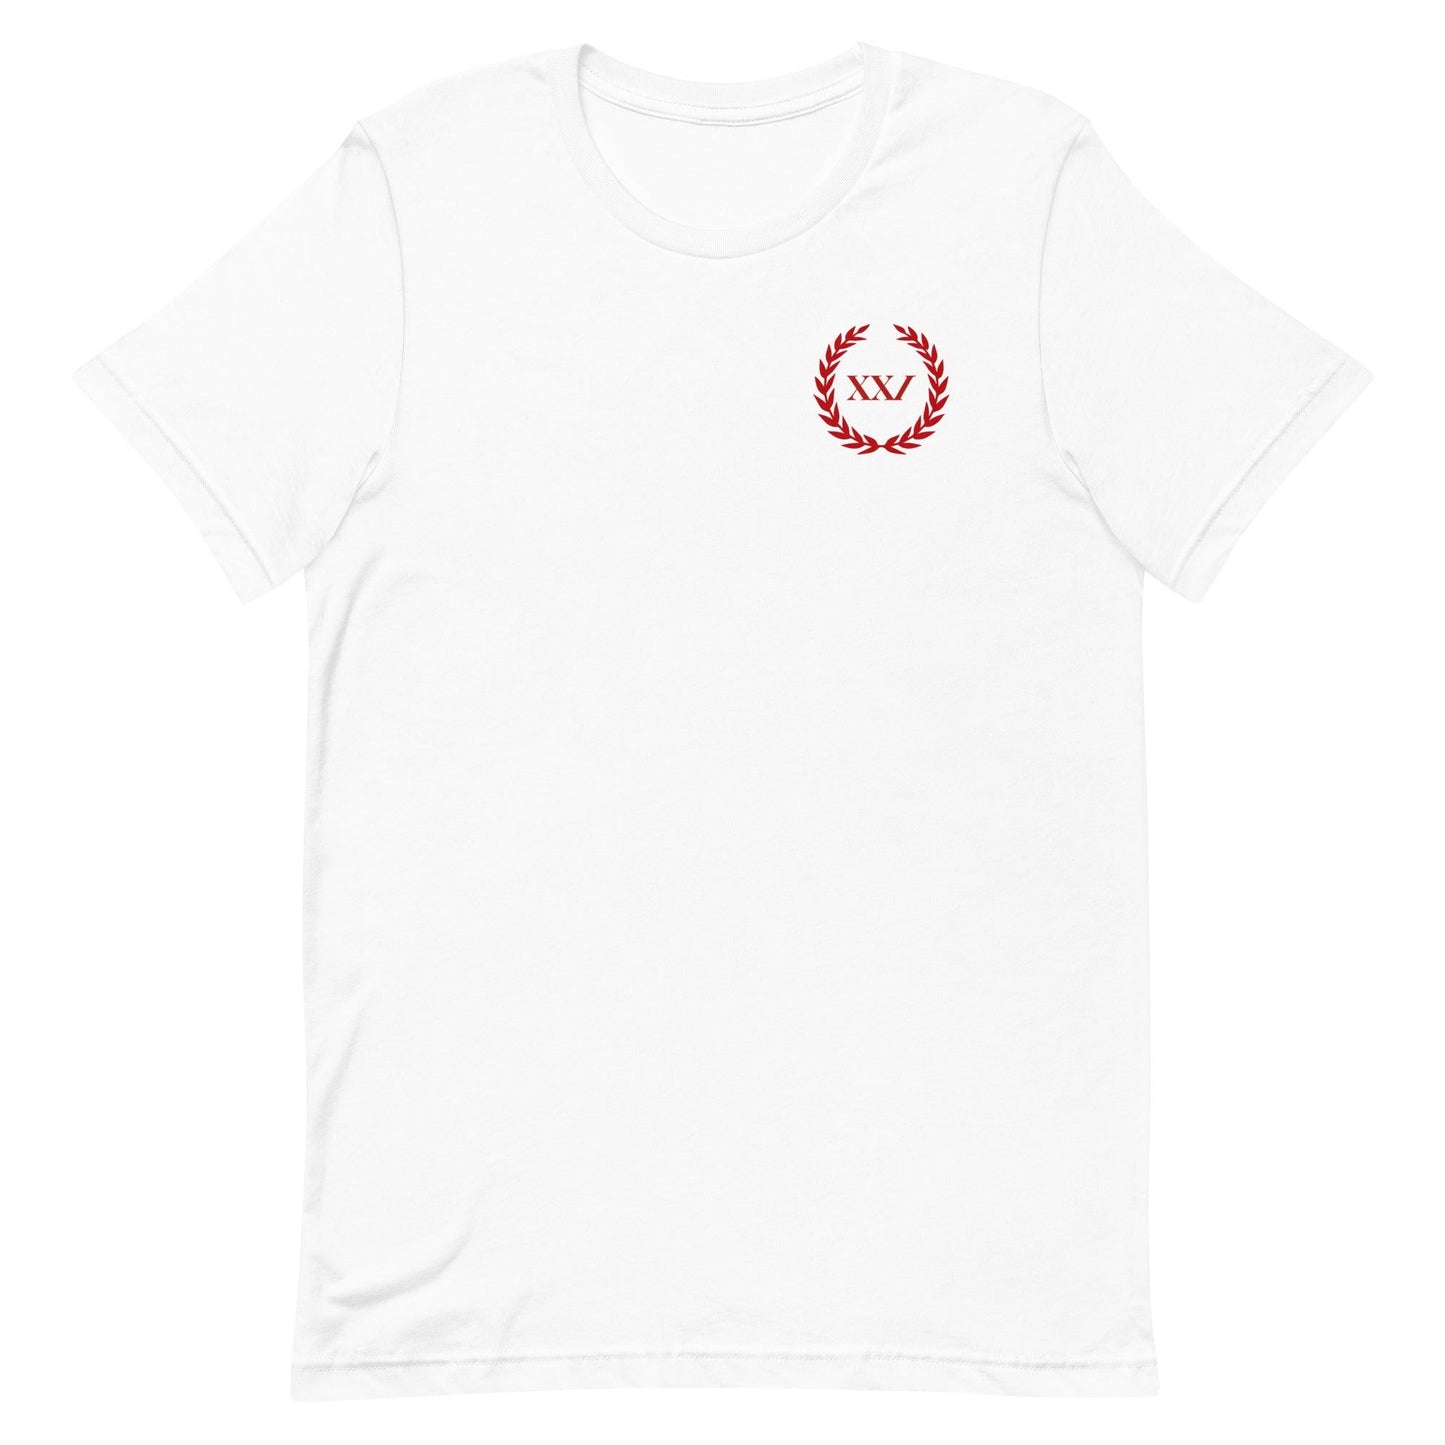 Caesar Williams "XVI" t-shirt - Fan Arch